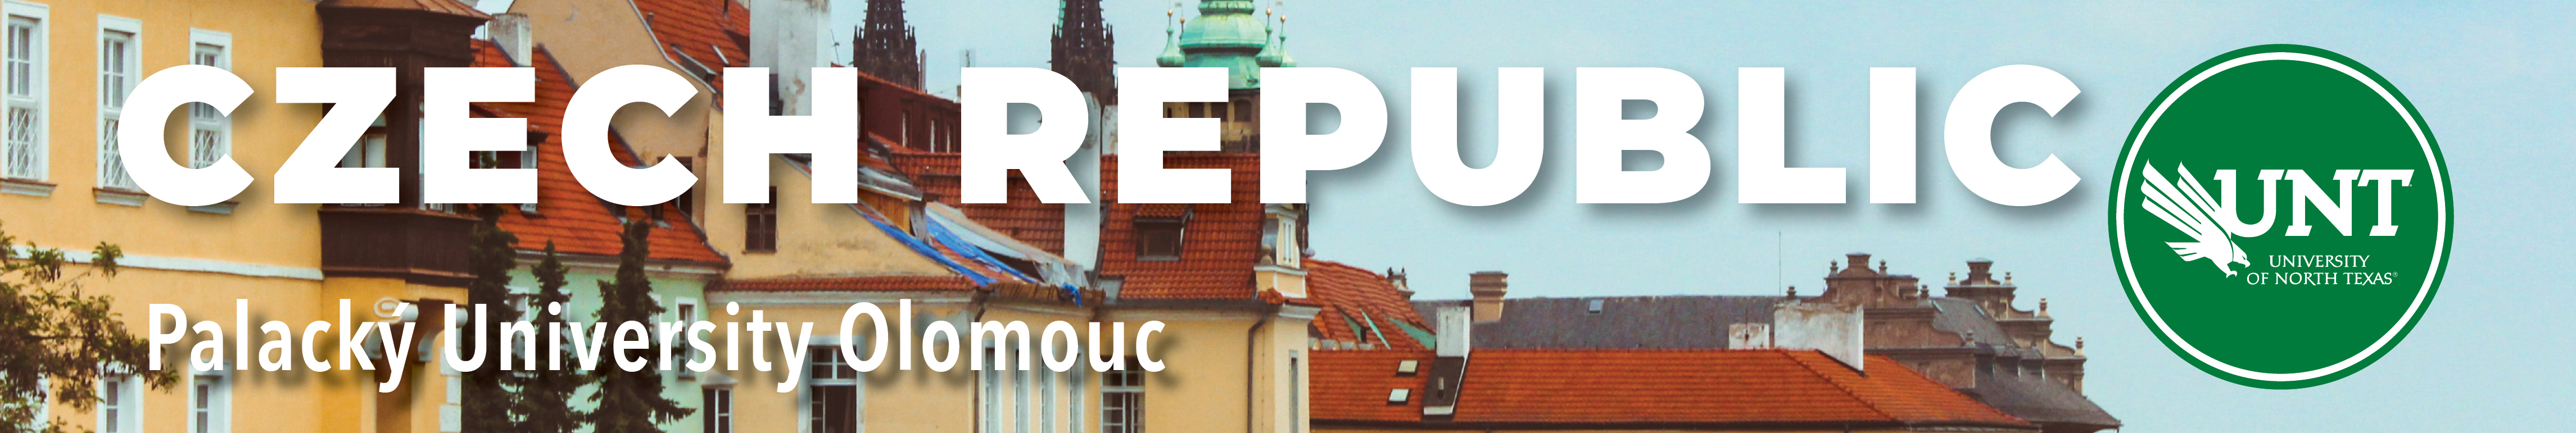 Czech Republic Palace Banner